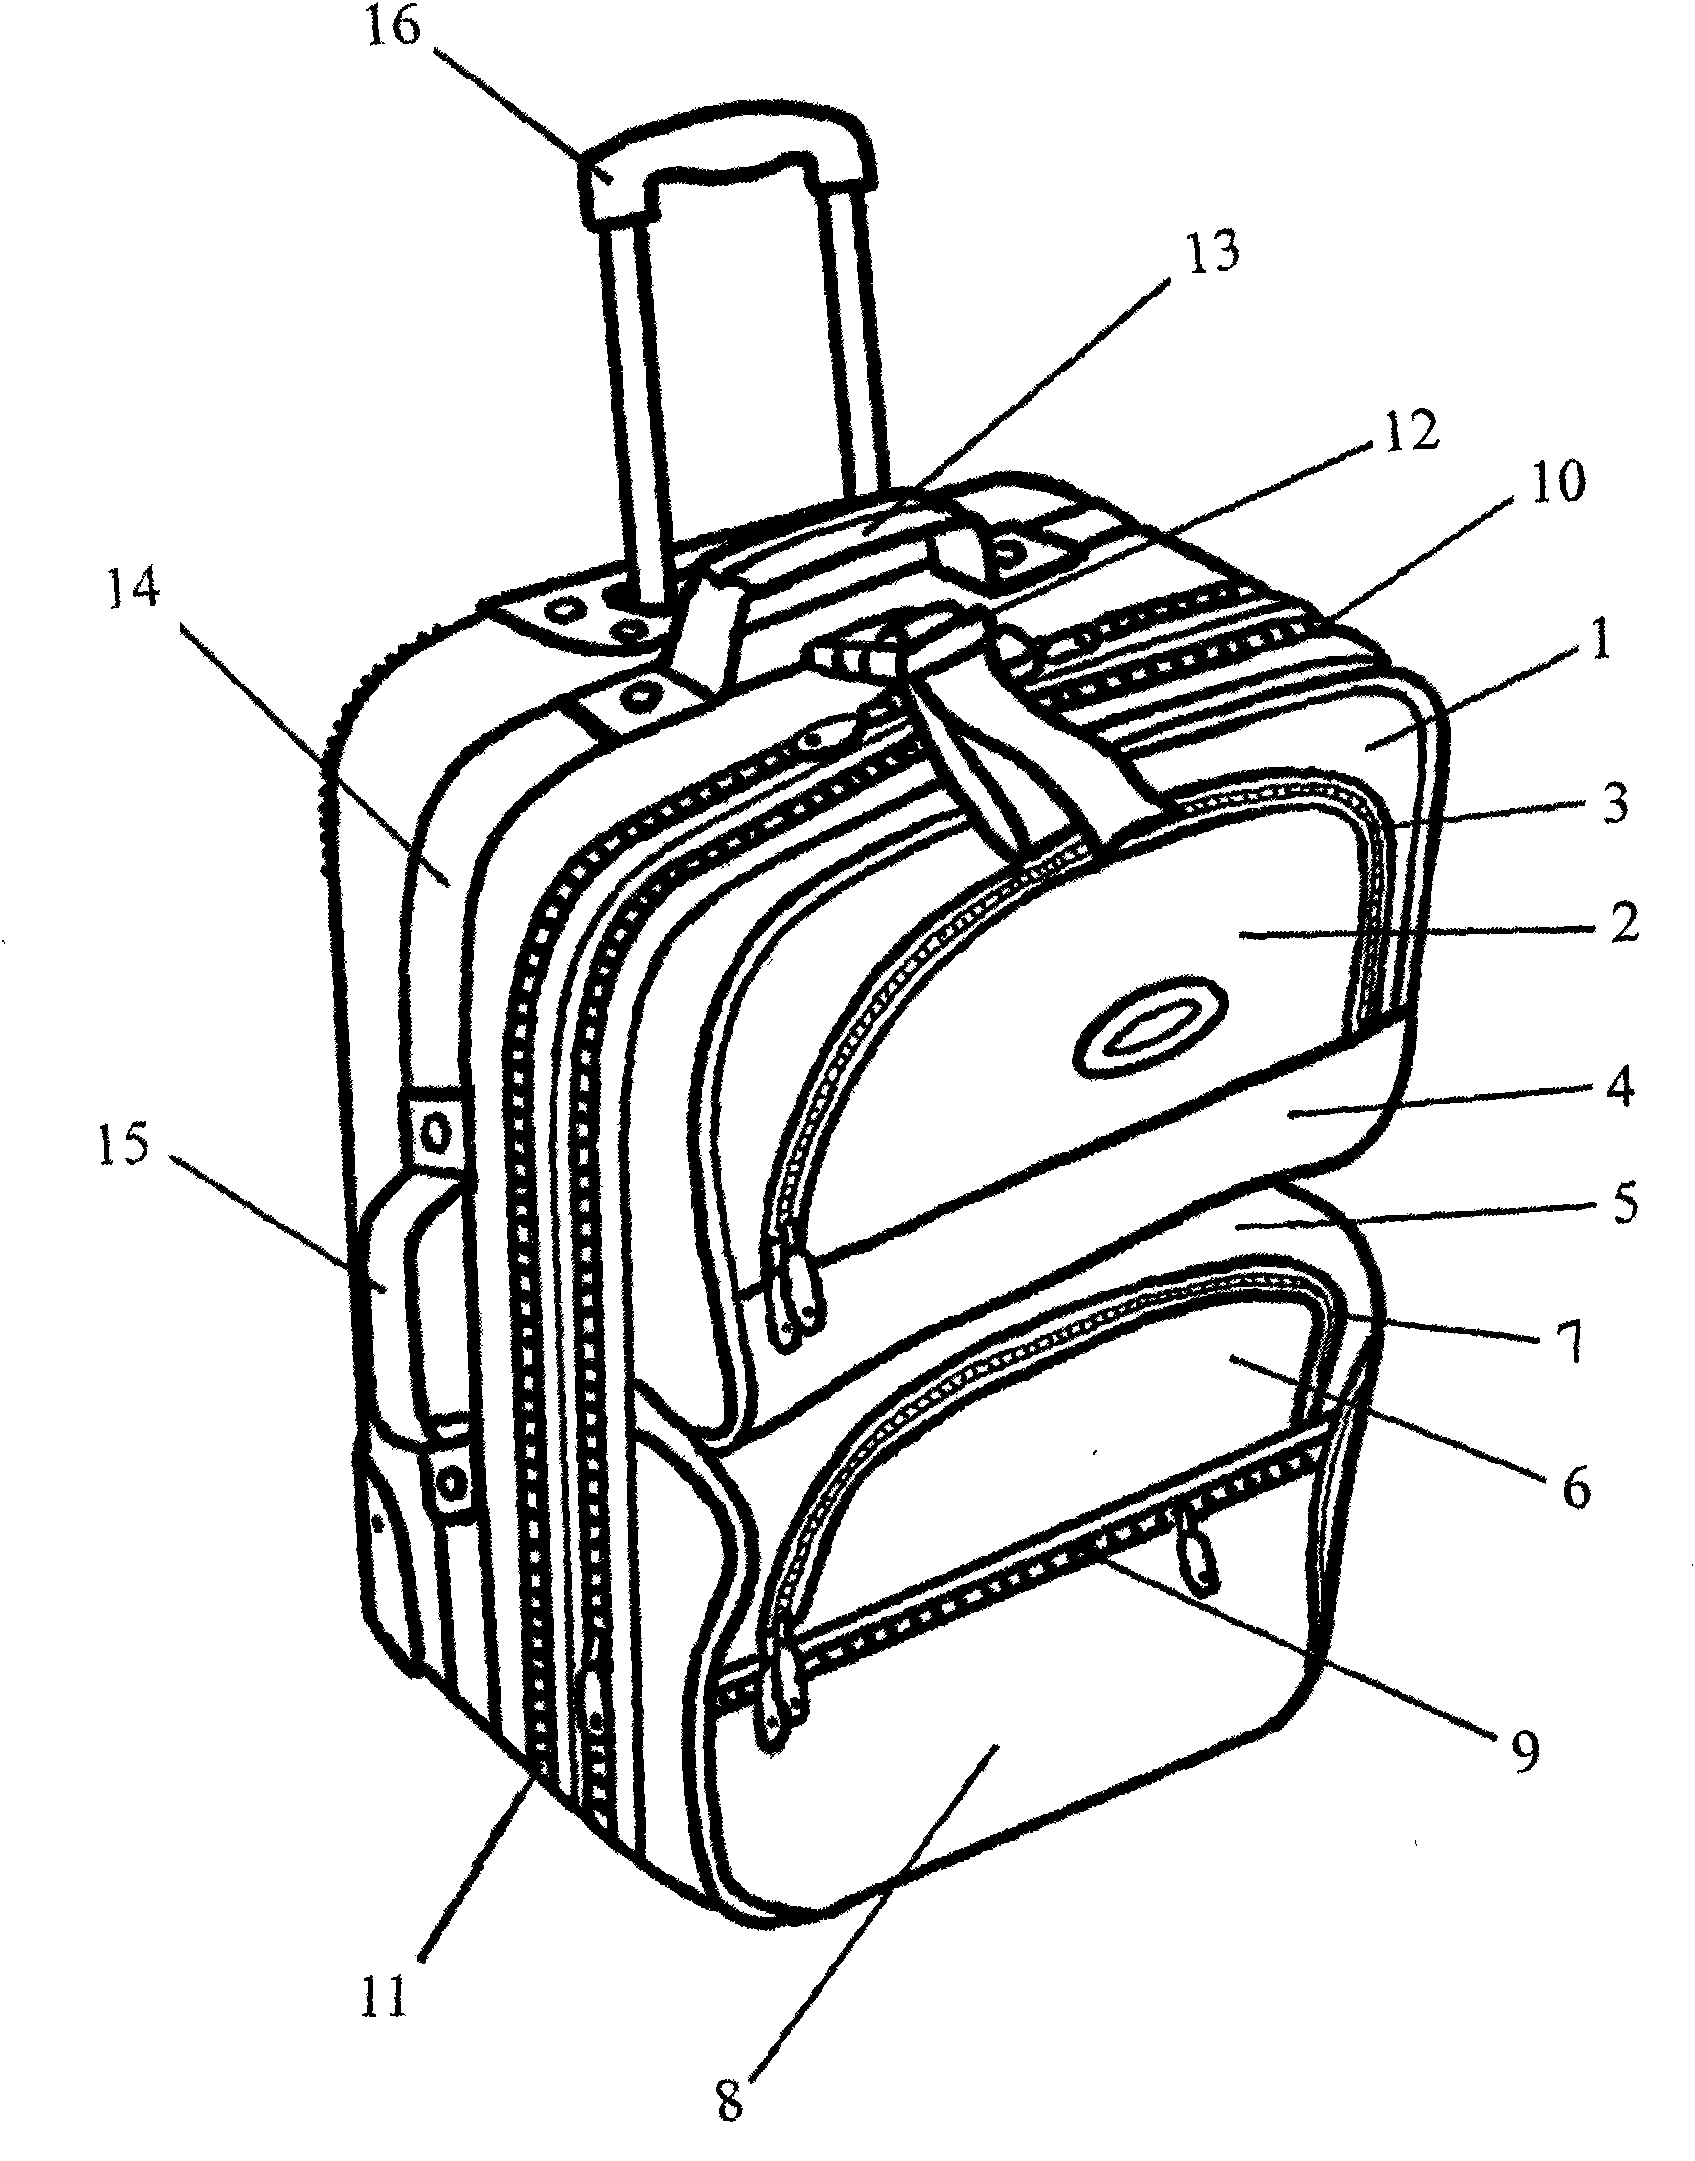 Draw-bar box having retaining ring, belt and three convex bags